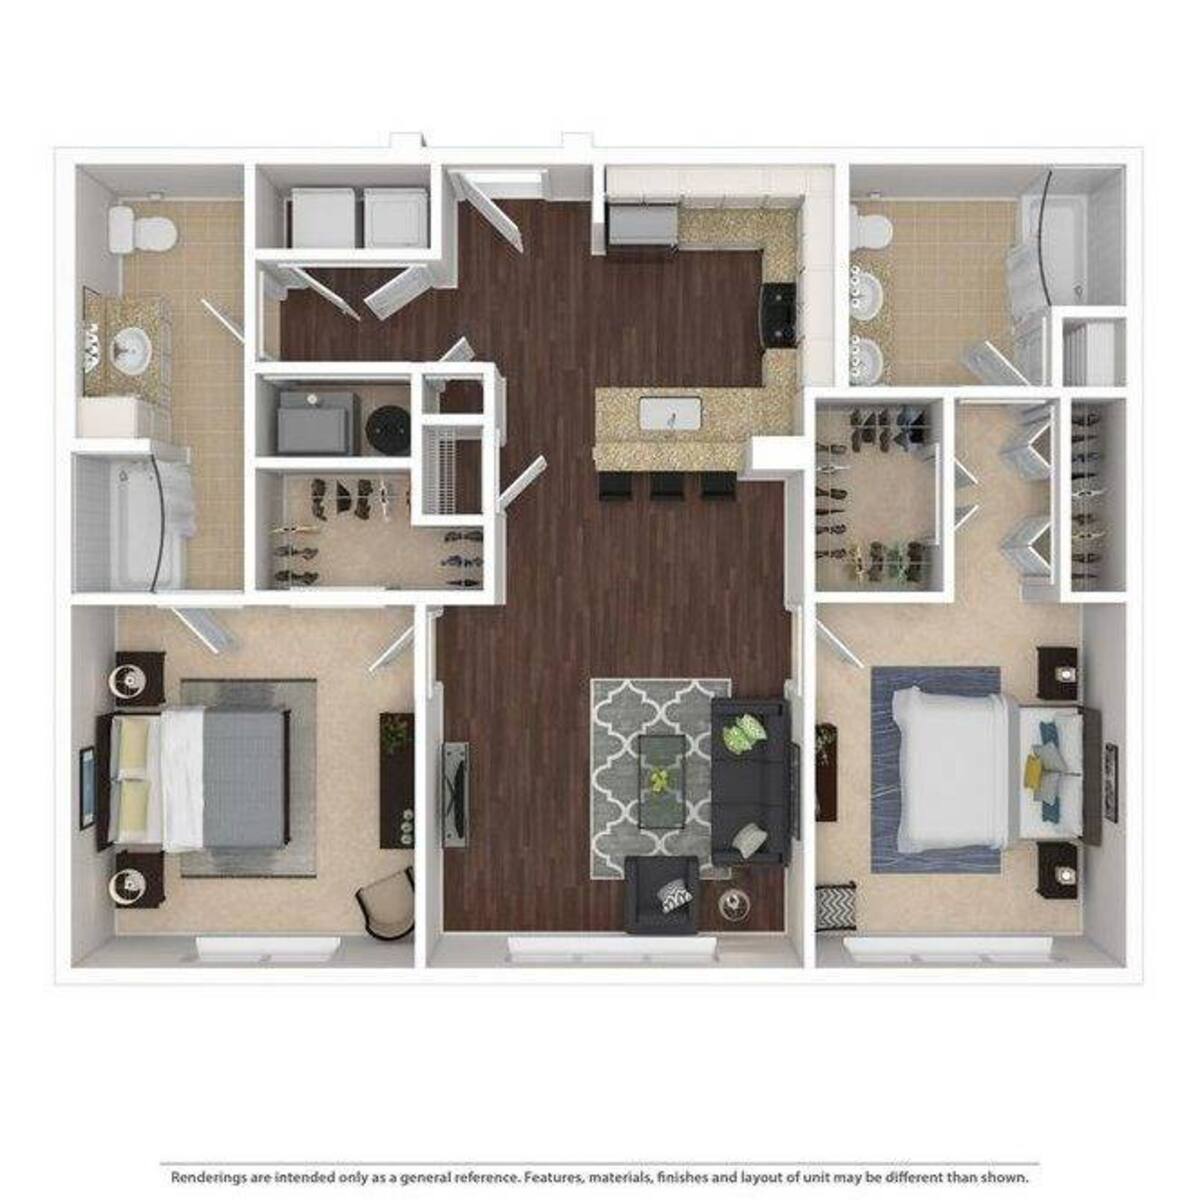 Floorplan diagram for 2 Bedroom/2 Bathroom 1121-1296, showing 2 bedroom